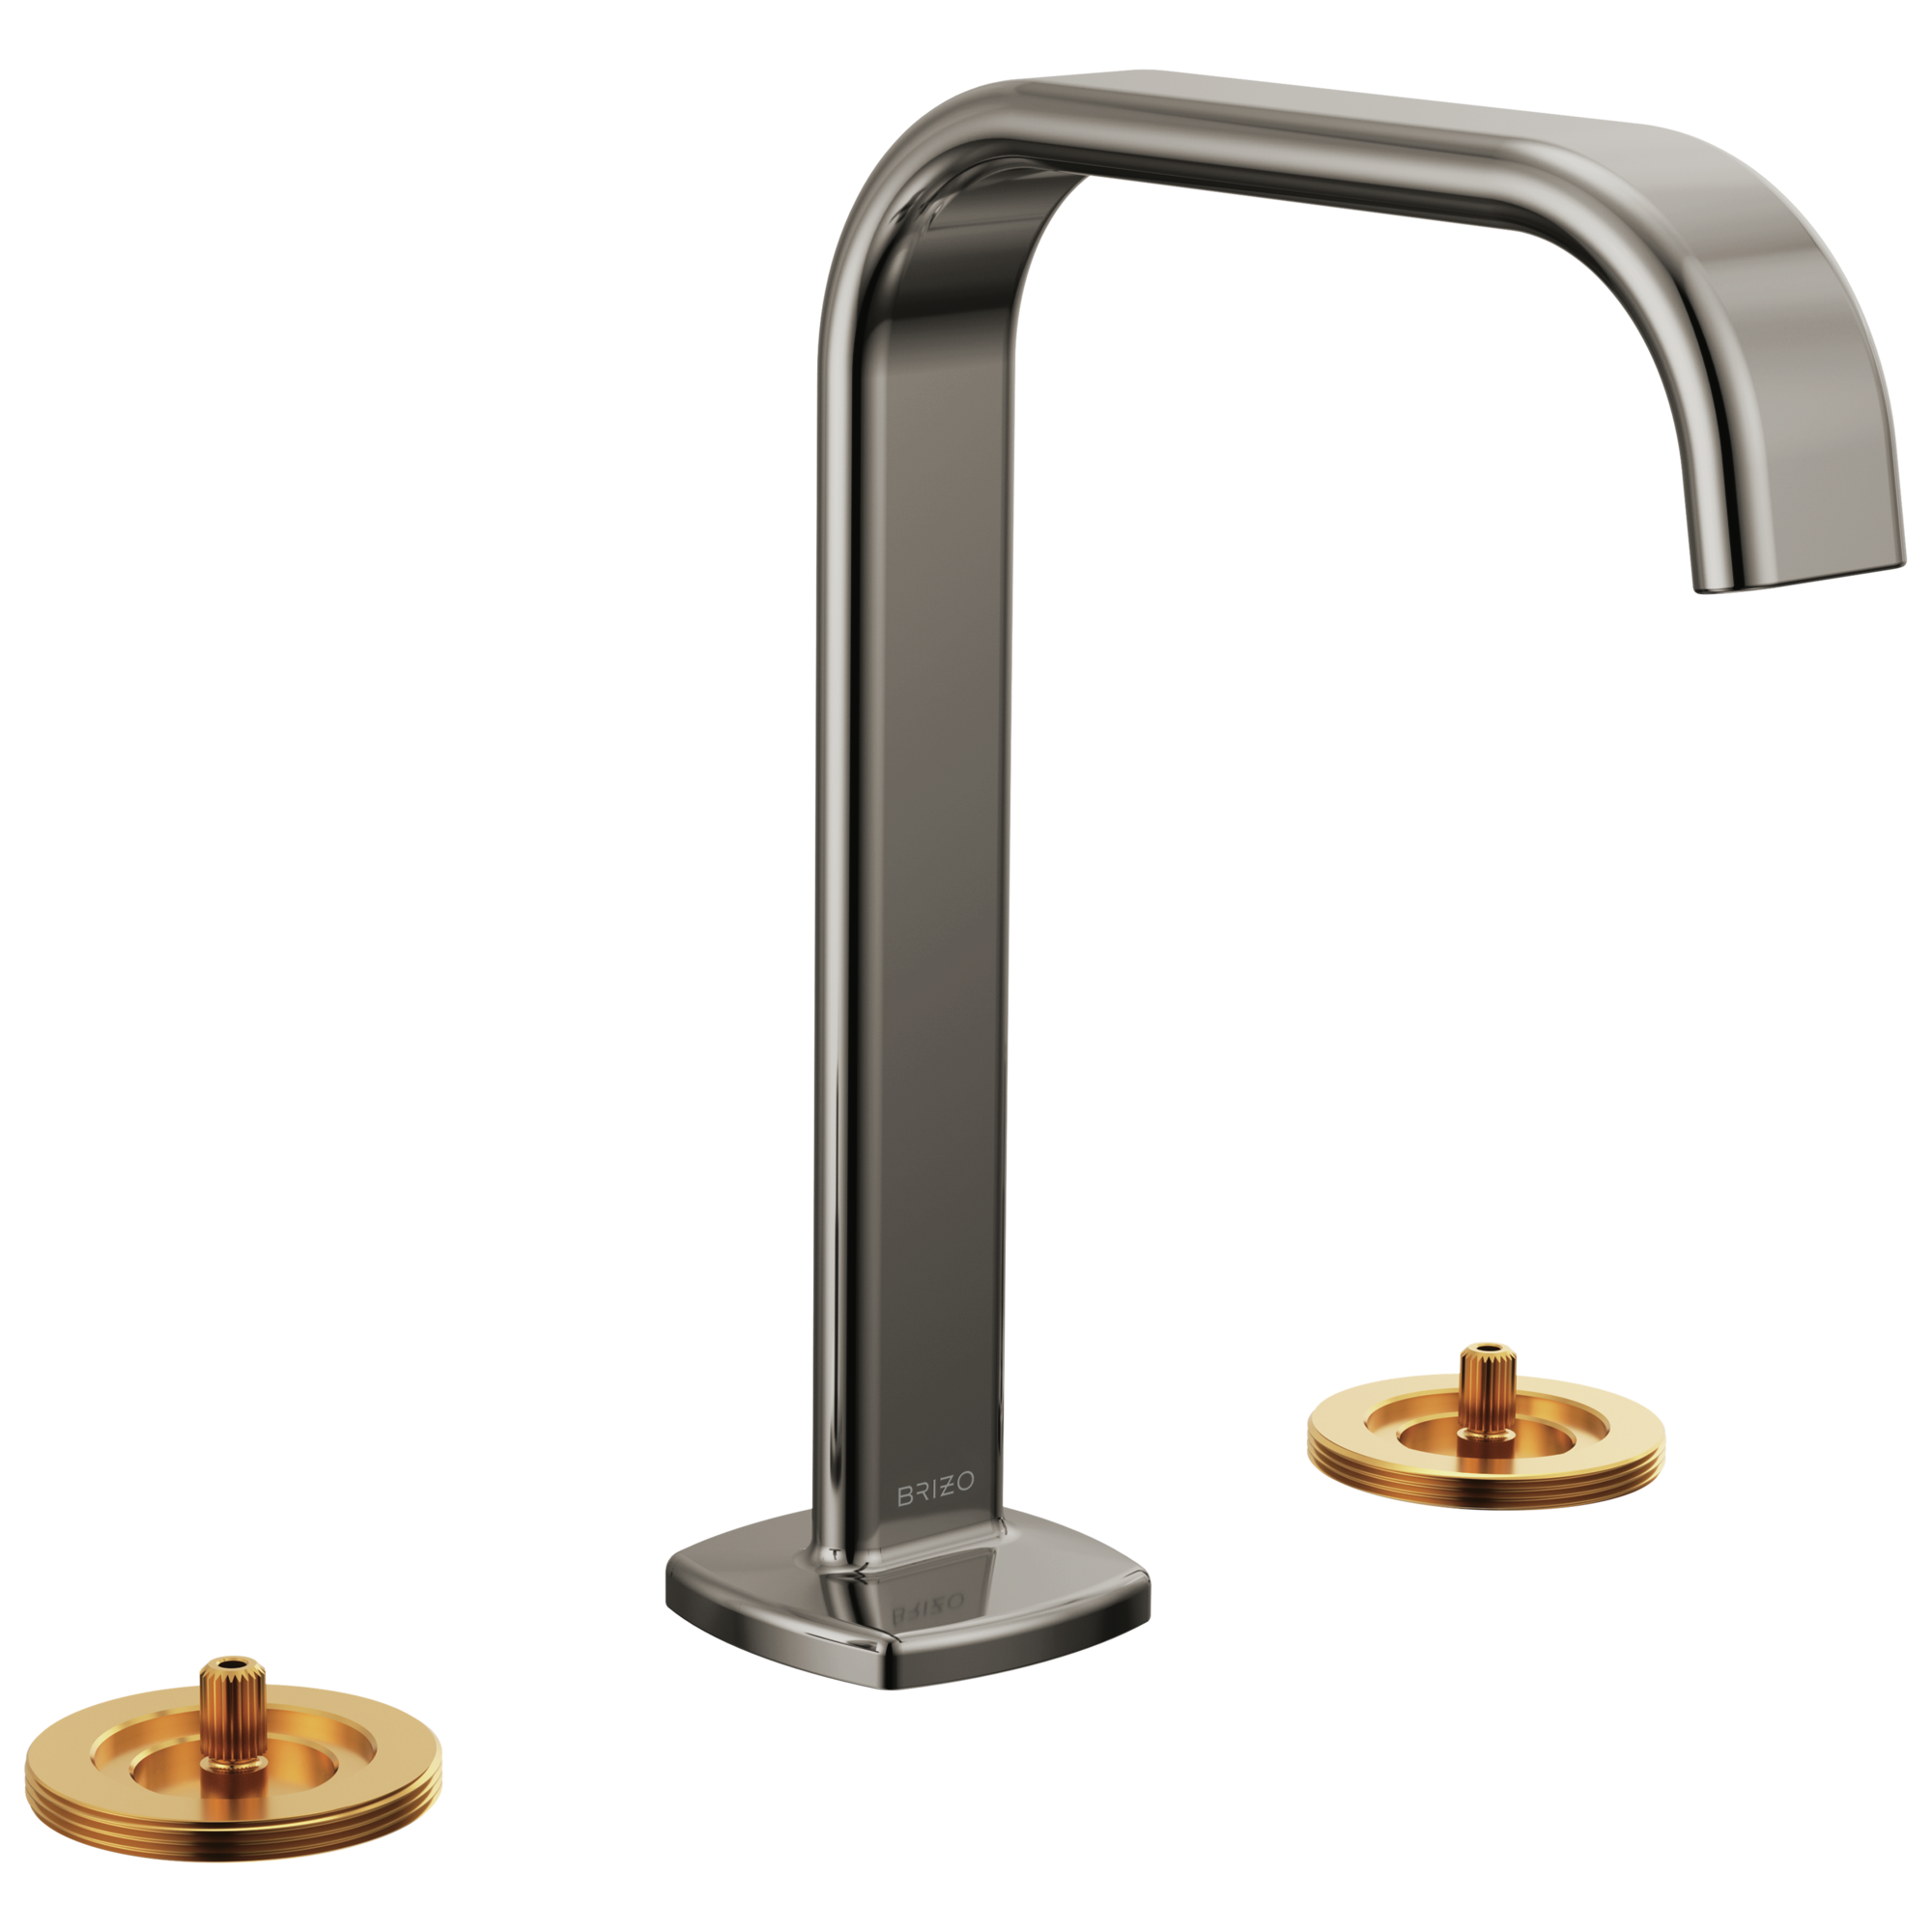 Brizo Allaria Widespread Lavatory Faucet with Square Spout - Less Handles